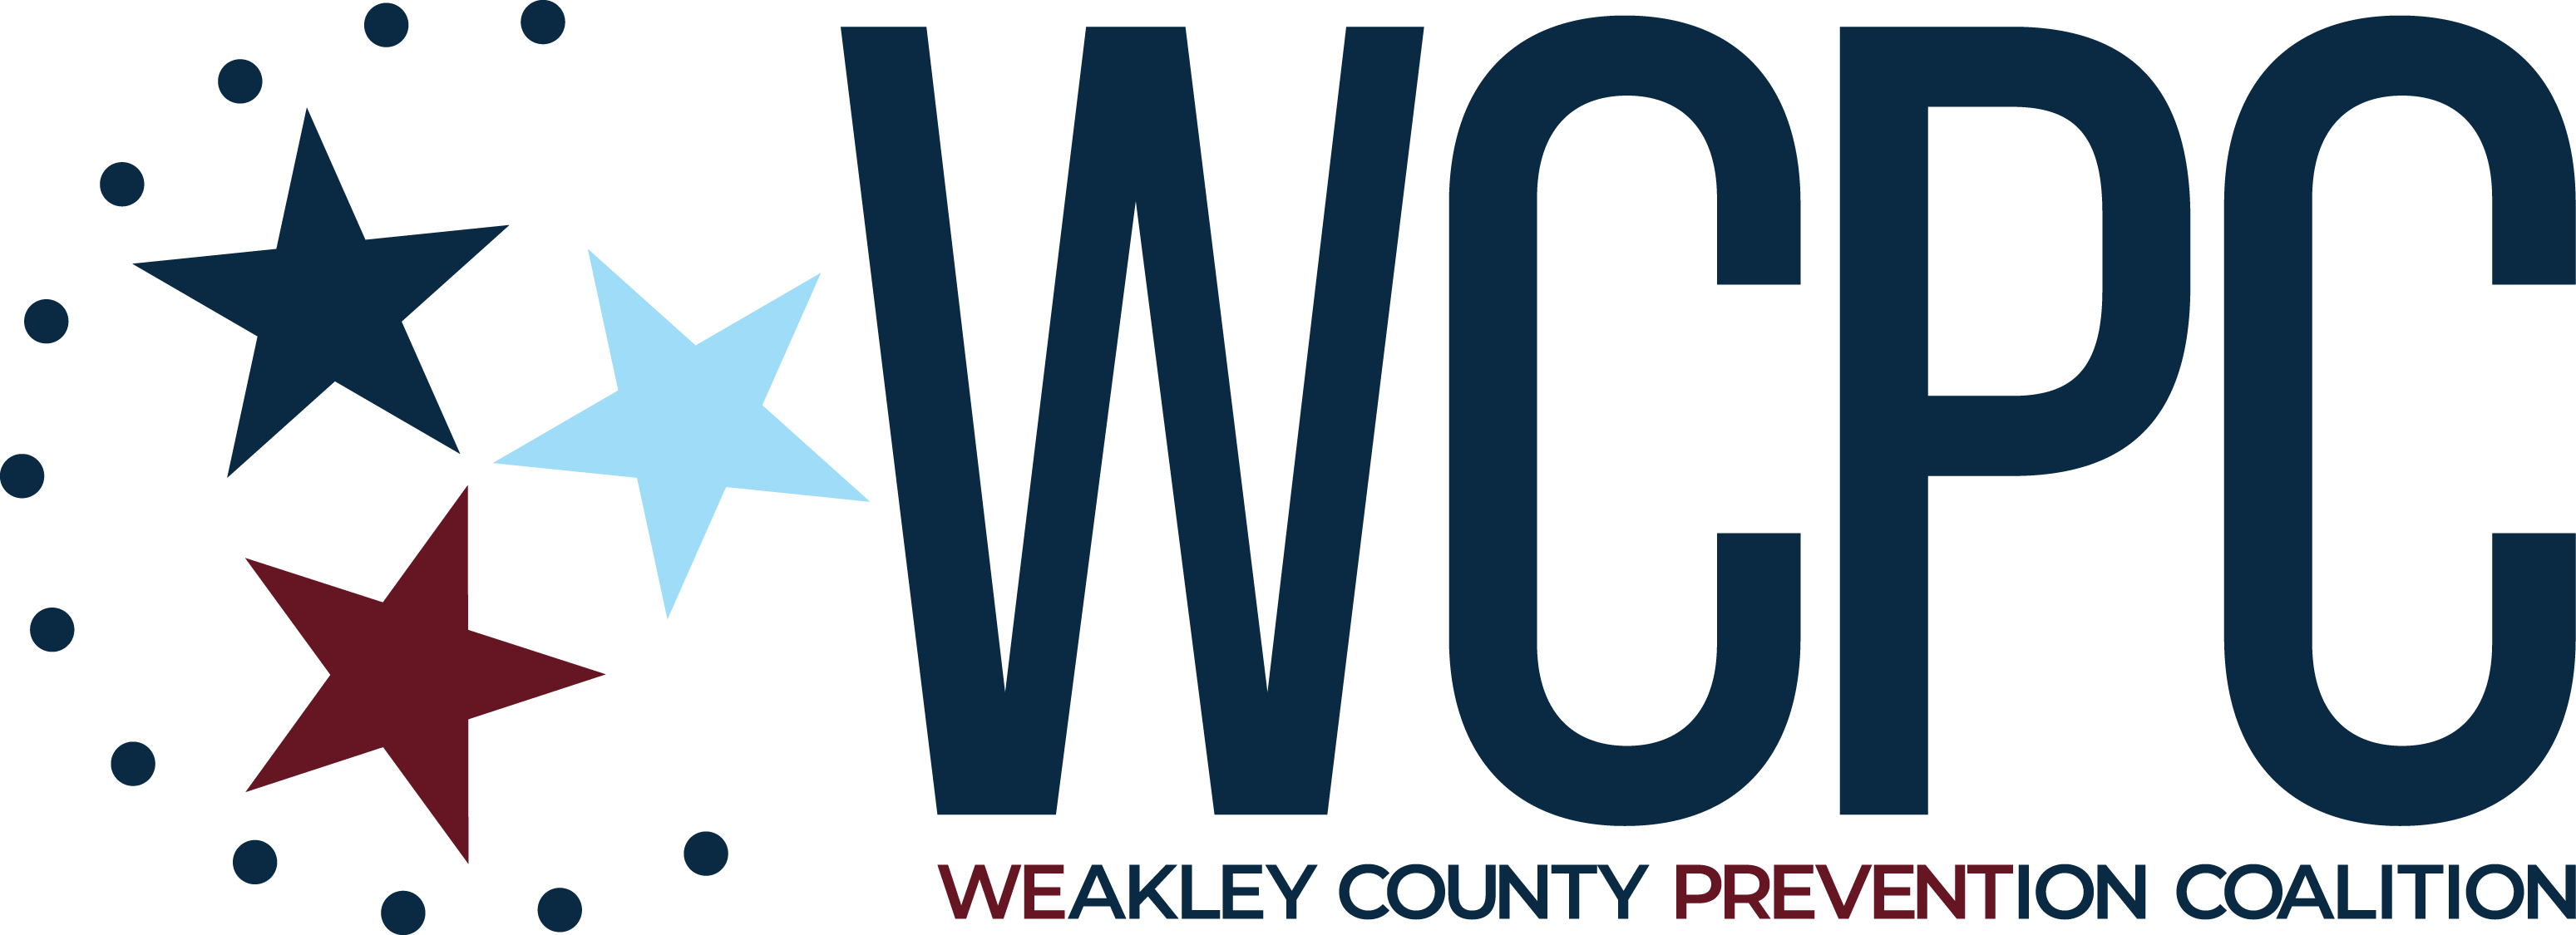 Weakley County Prevention